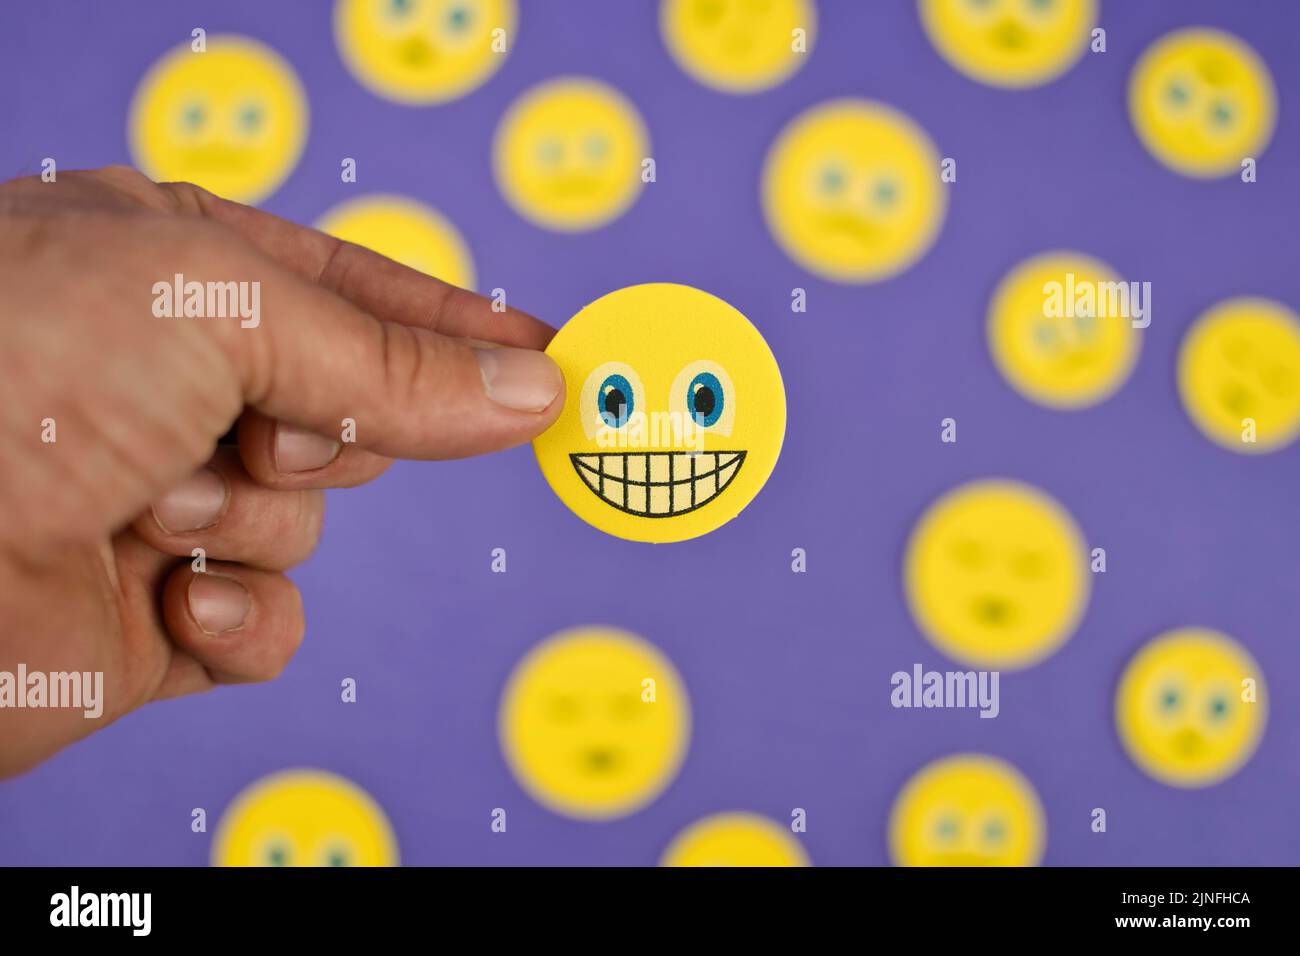 Closeup shot of hand holding yellow smiley face emoji between sad emojis on purple background background Stock Photo